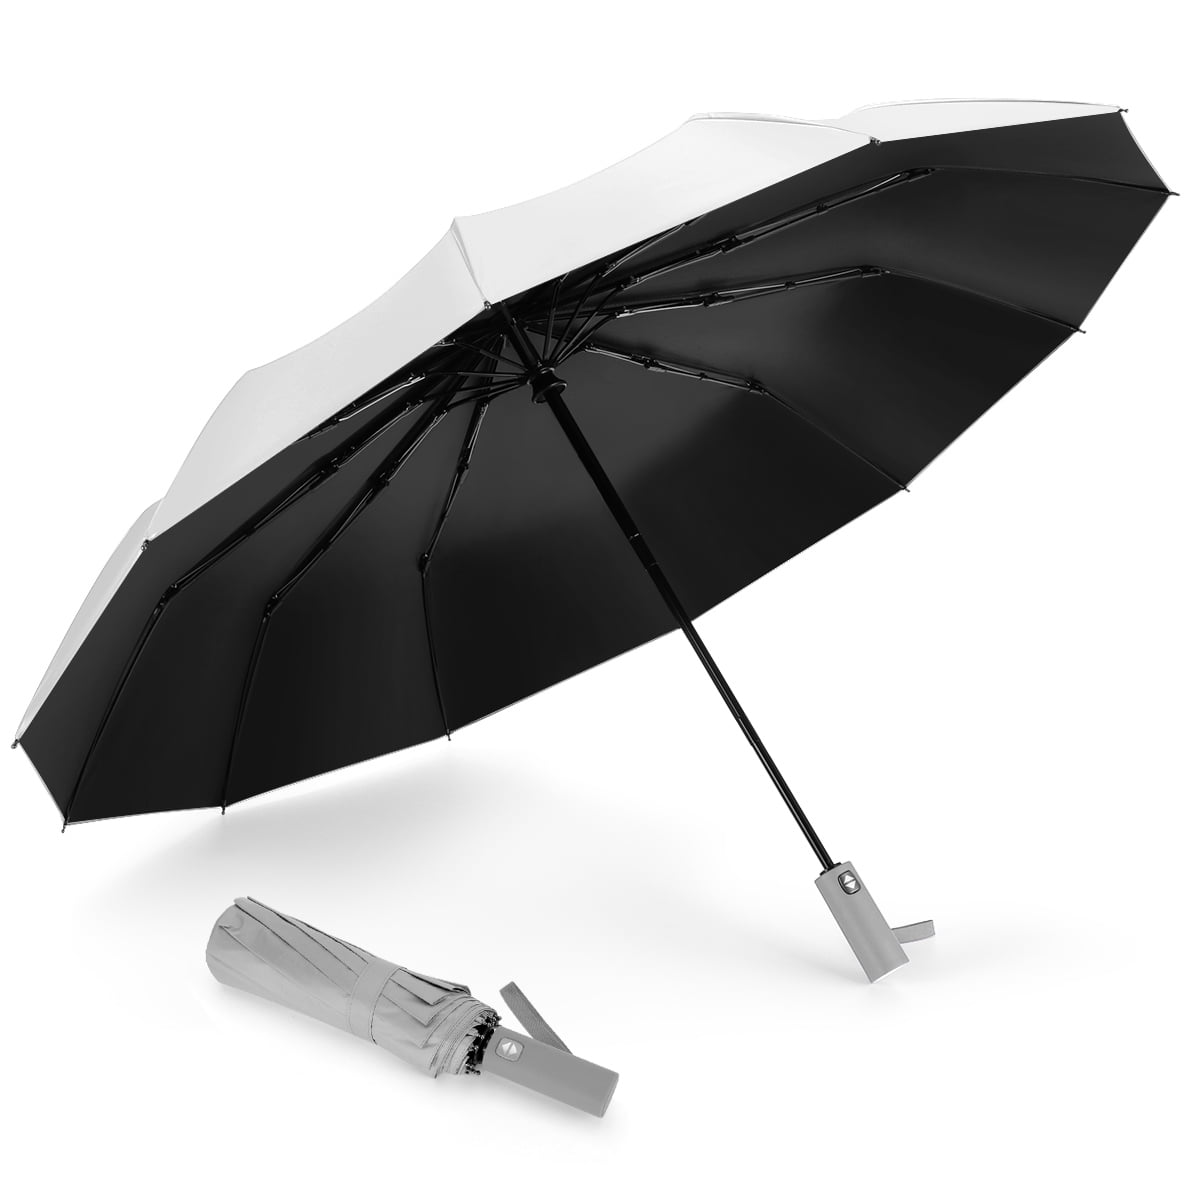 Auto Open & Close Button for Single Hand Use Fiberglass Ribs Teflon Umbrella for Rain and Sun 2022 New Upgrade -12 Ribs Umbrella Windproof Automatic Folding Umbrella 